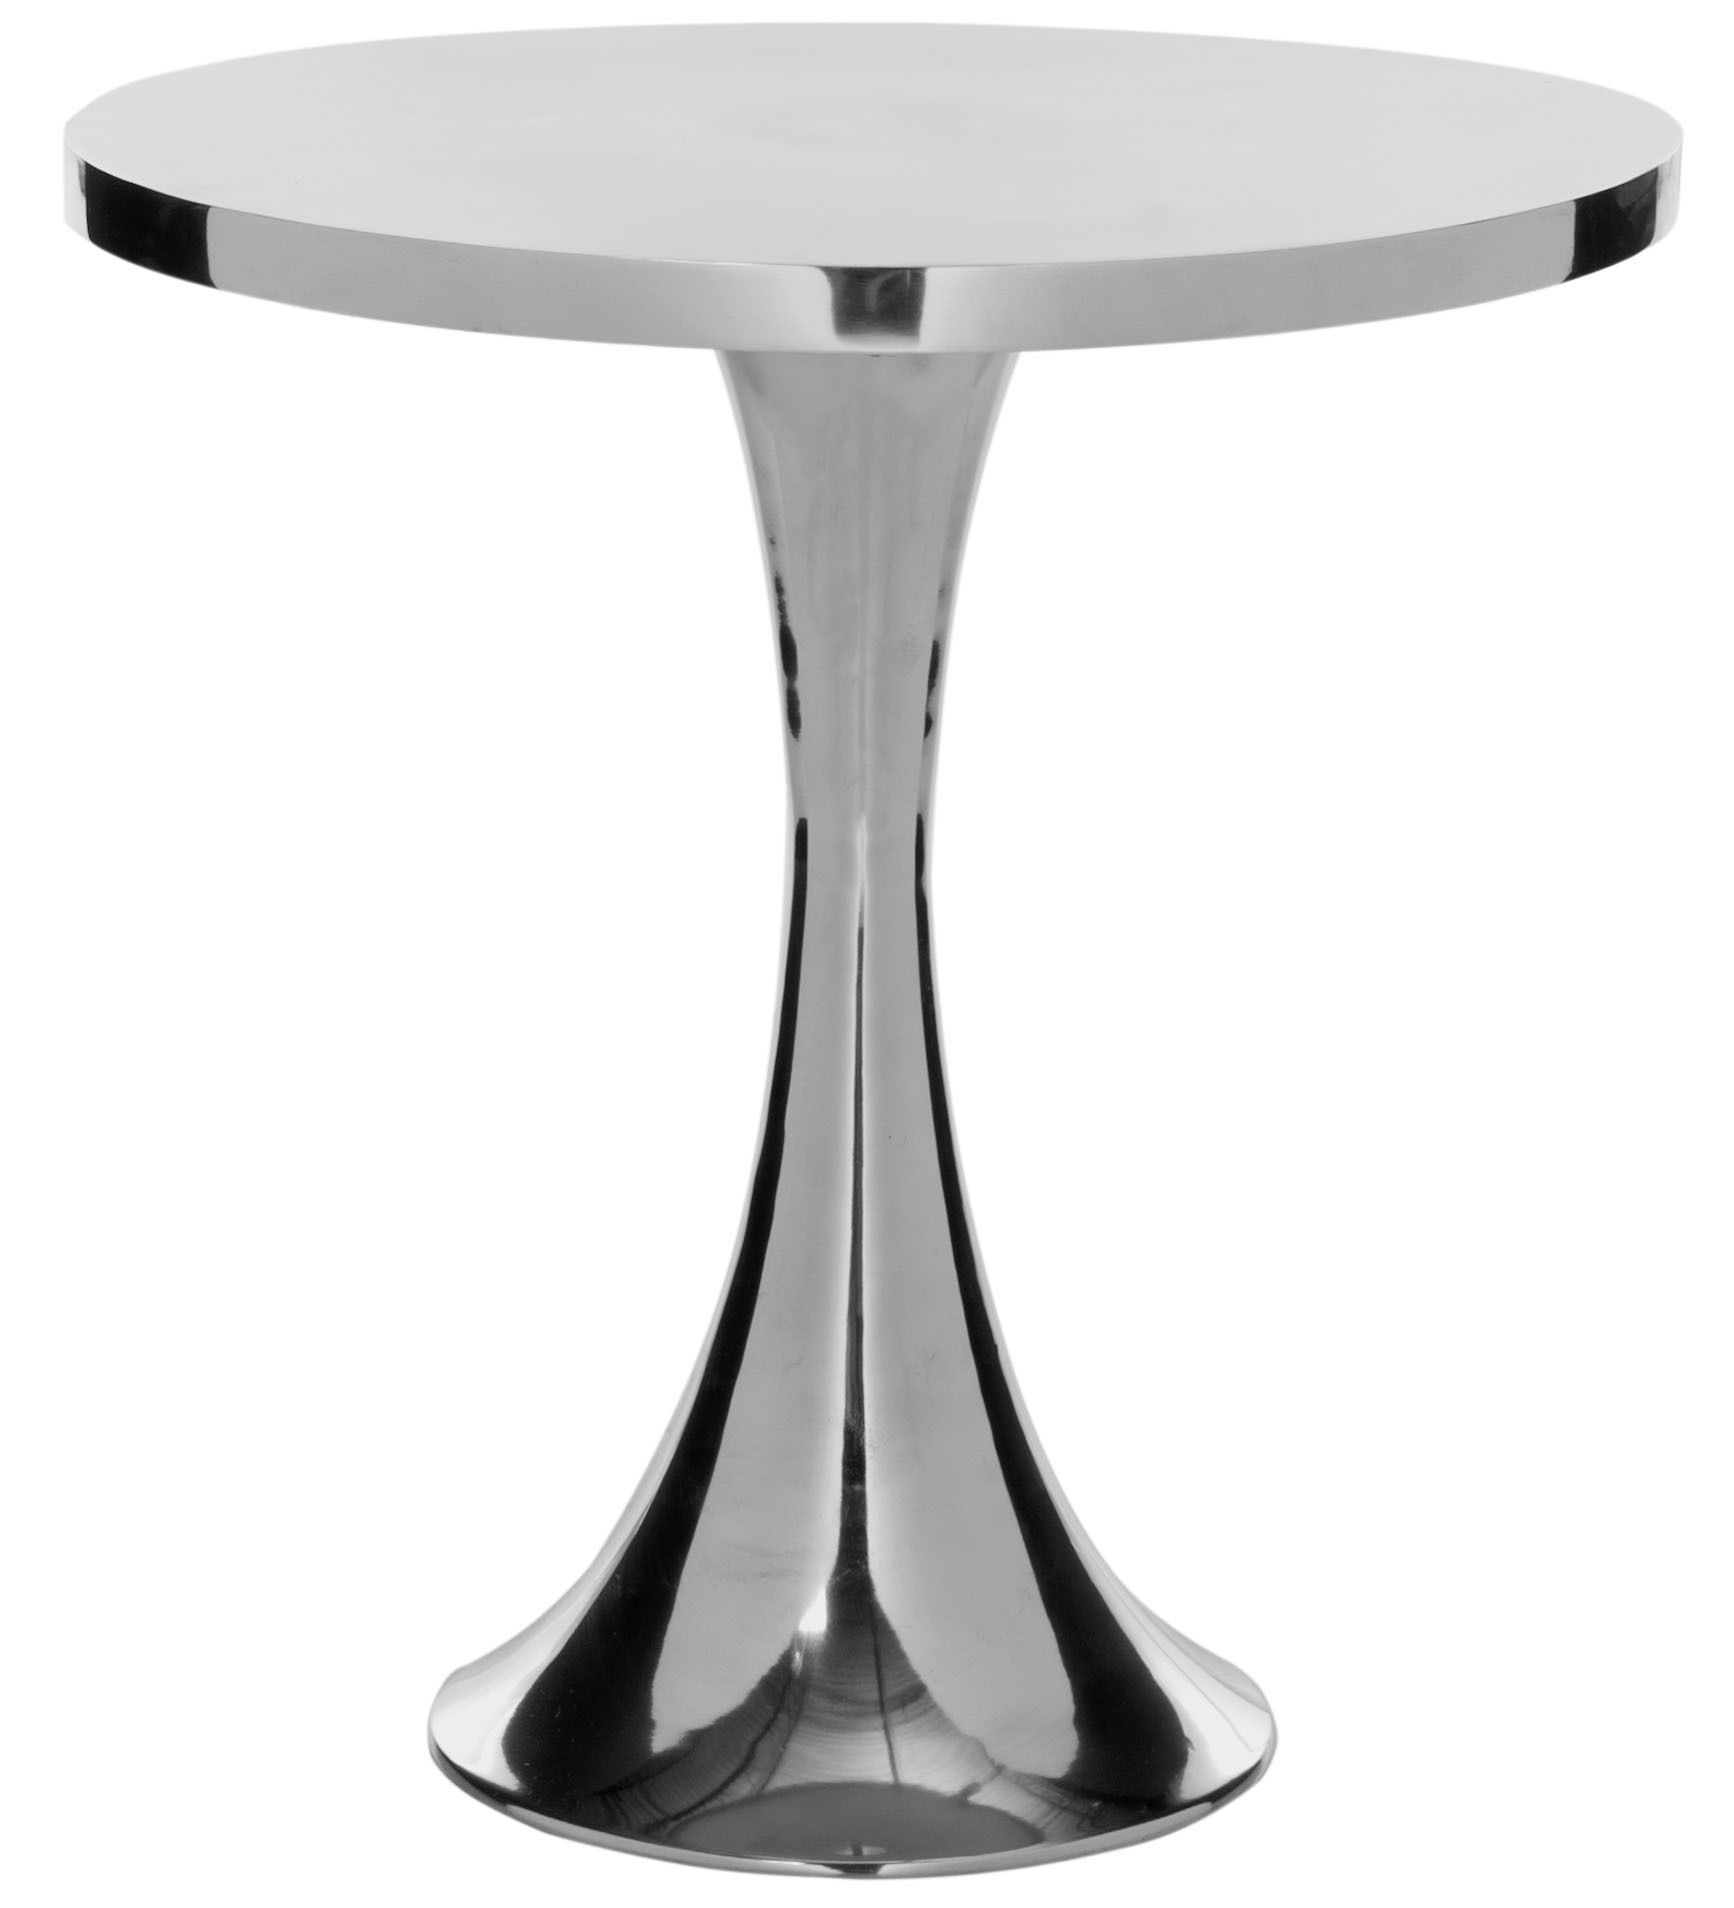 SAFAVIEH Galium 19.25 in. H Aluminum Round Top Side Table, Silver - image 1 of 4